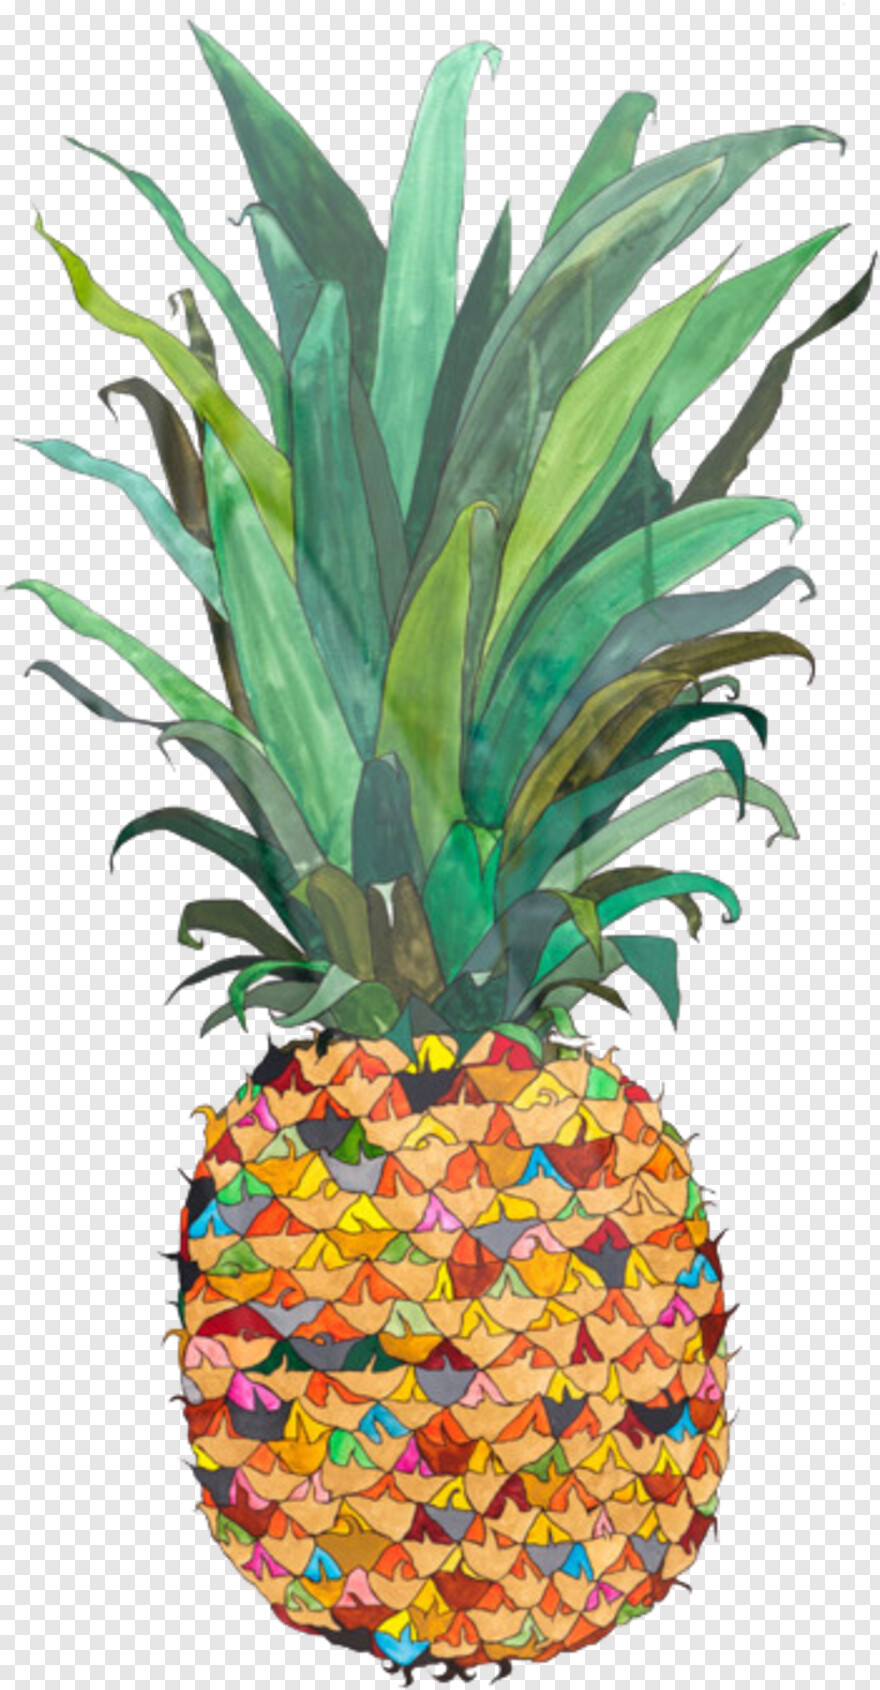 pineapple # 1059132